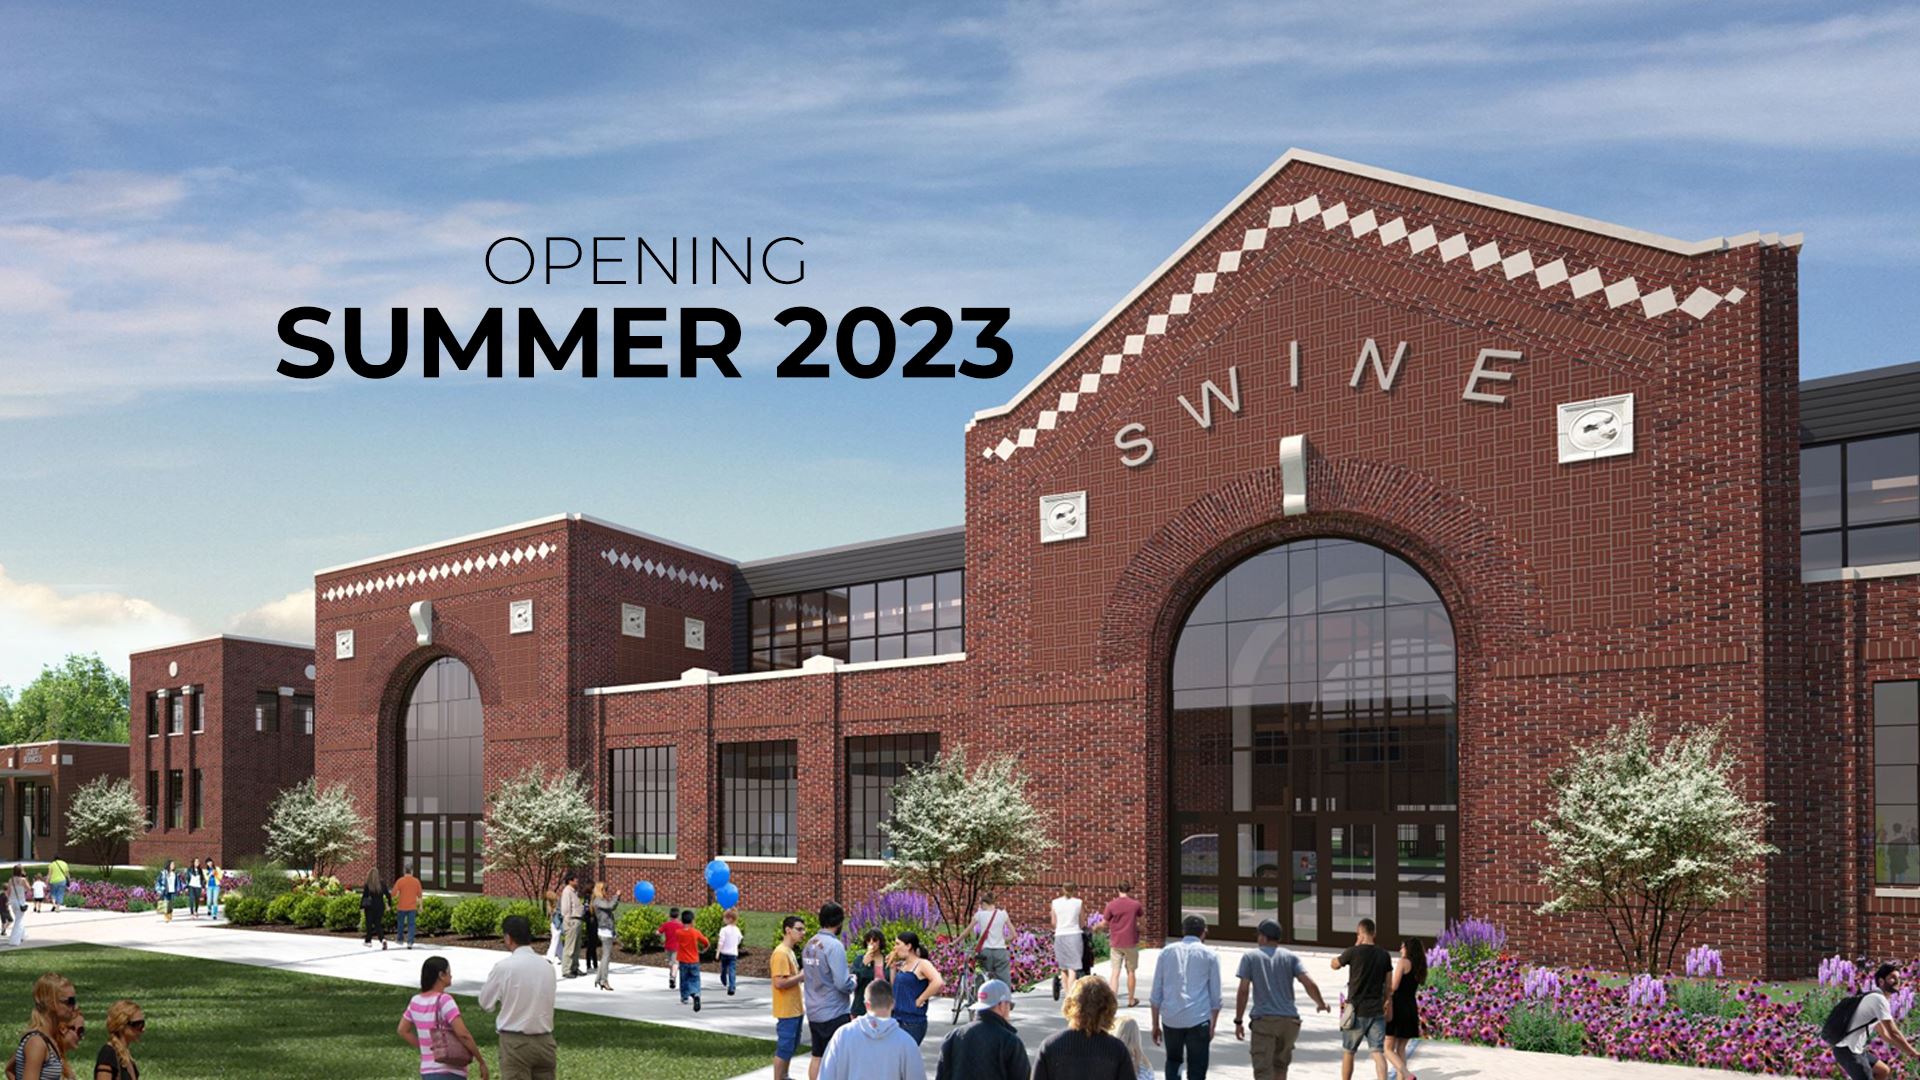 Opening Summer 2023